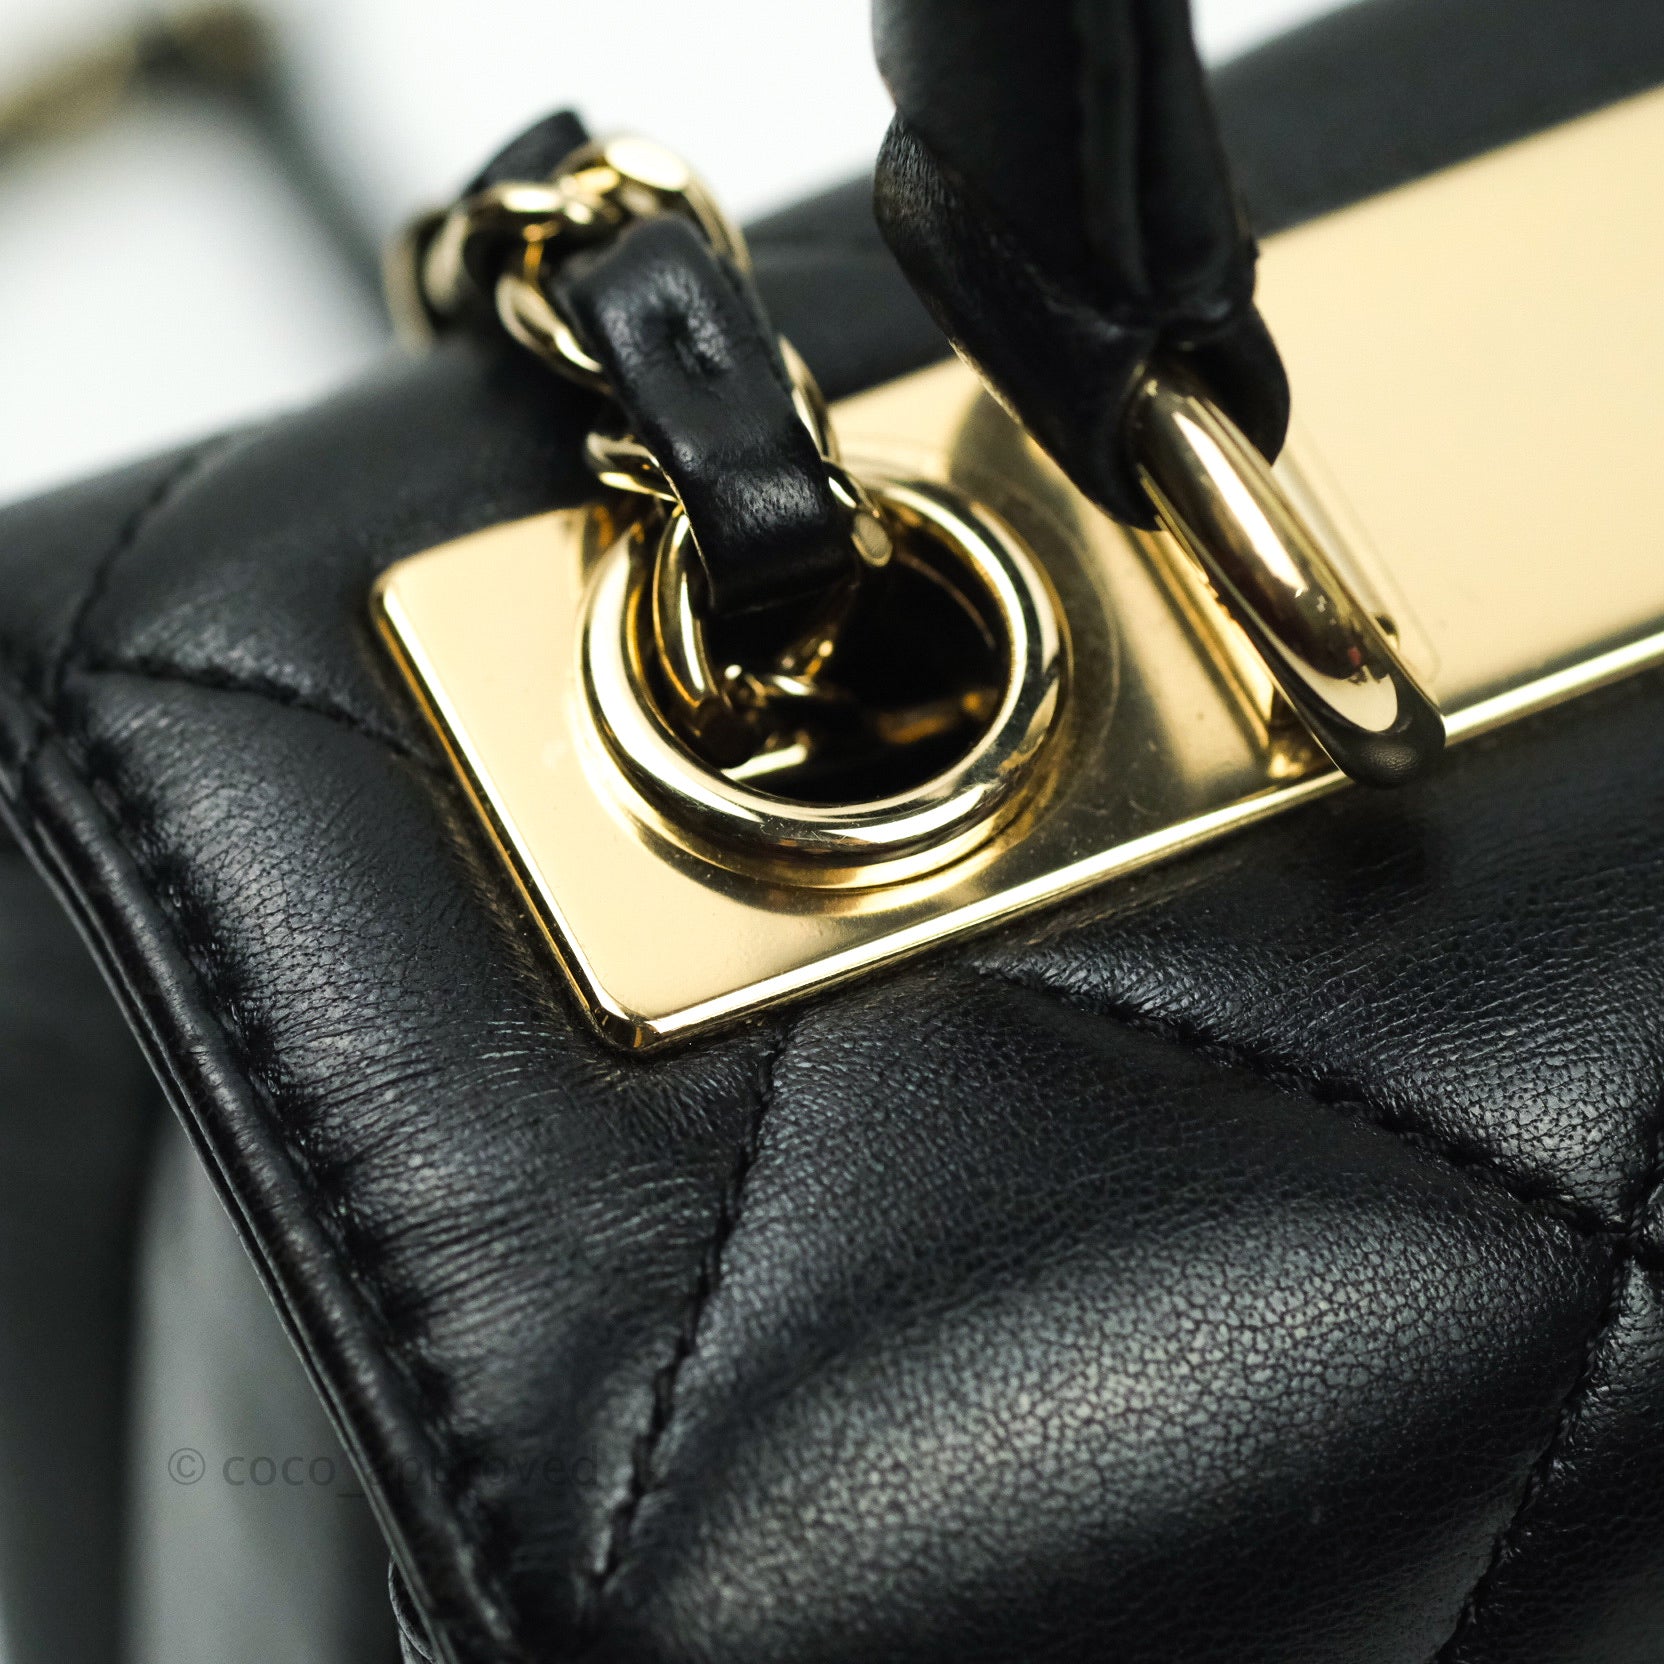 Chanel Trendy CC Small Black Lambskin Gold Hardware